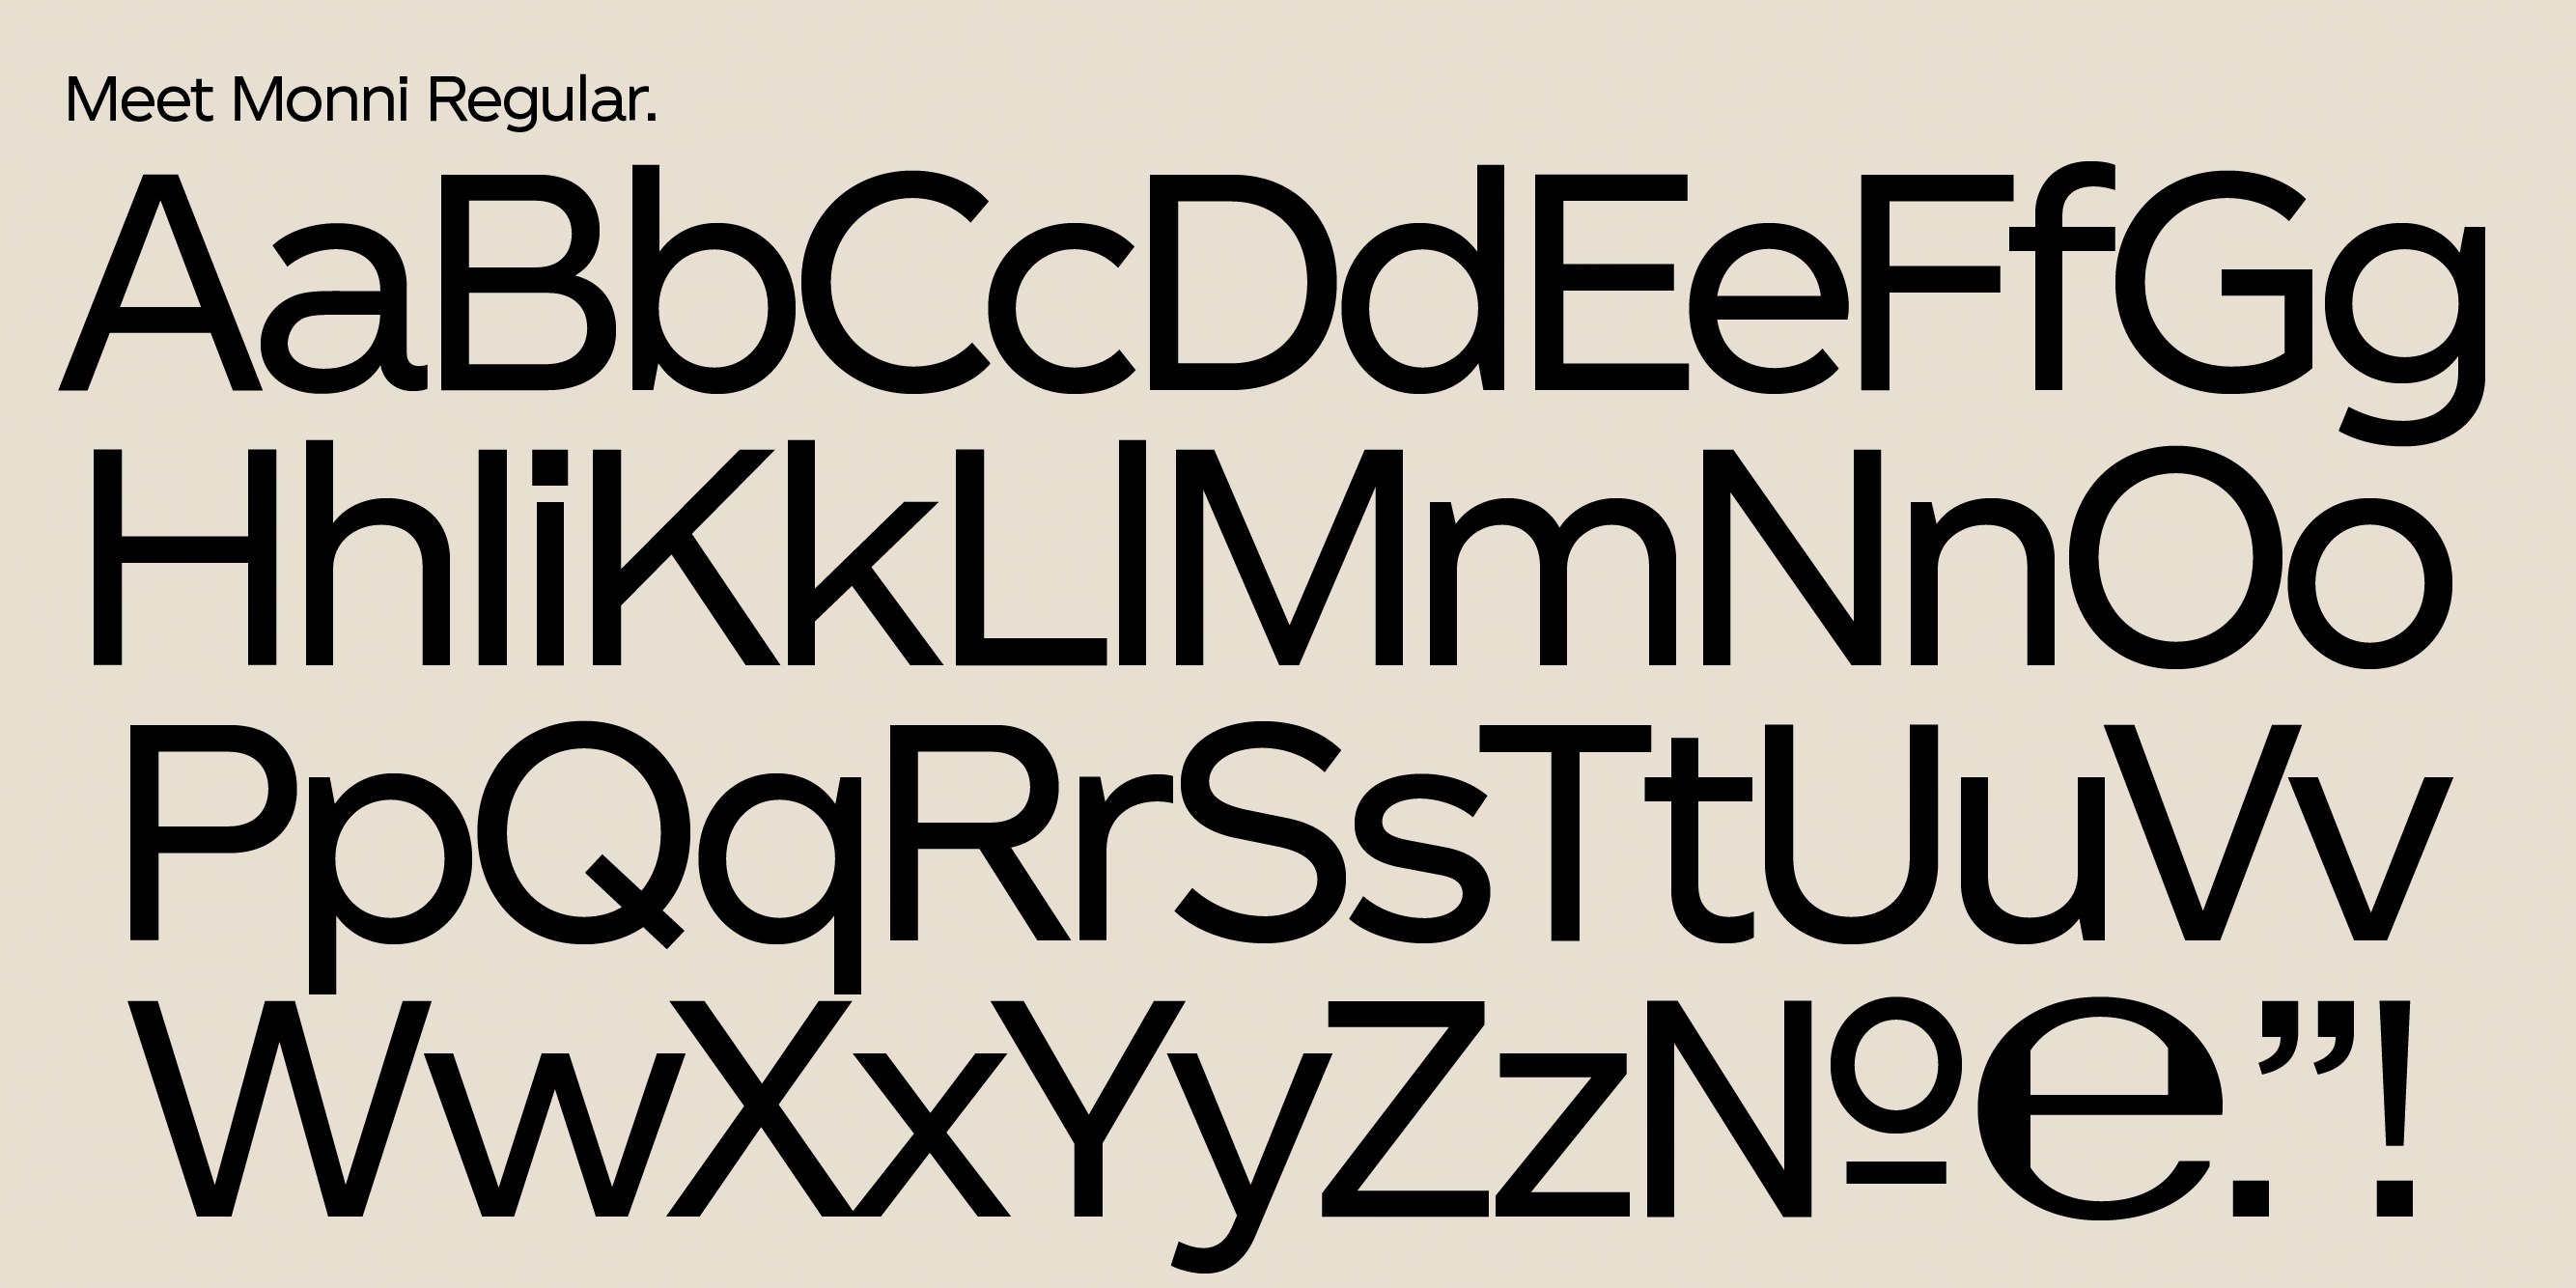 Monni Designer Font glyphs